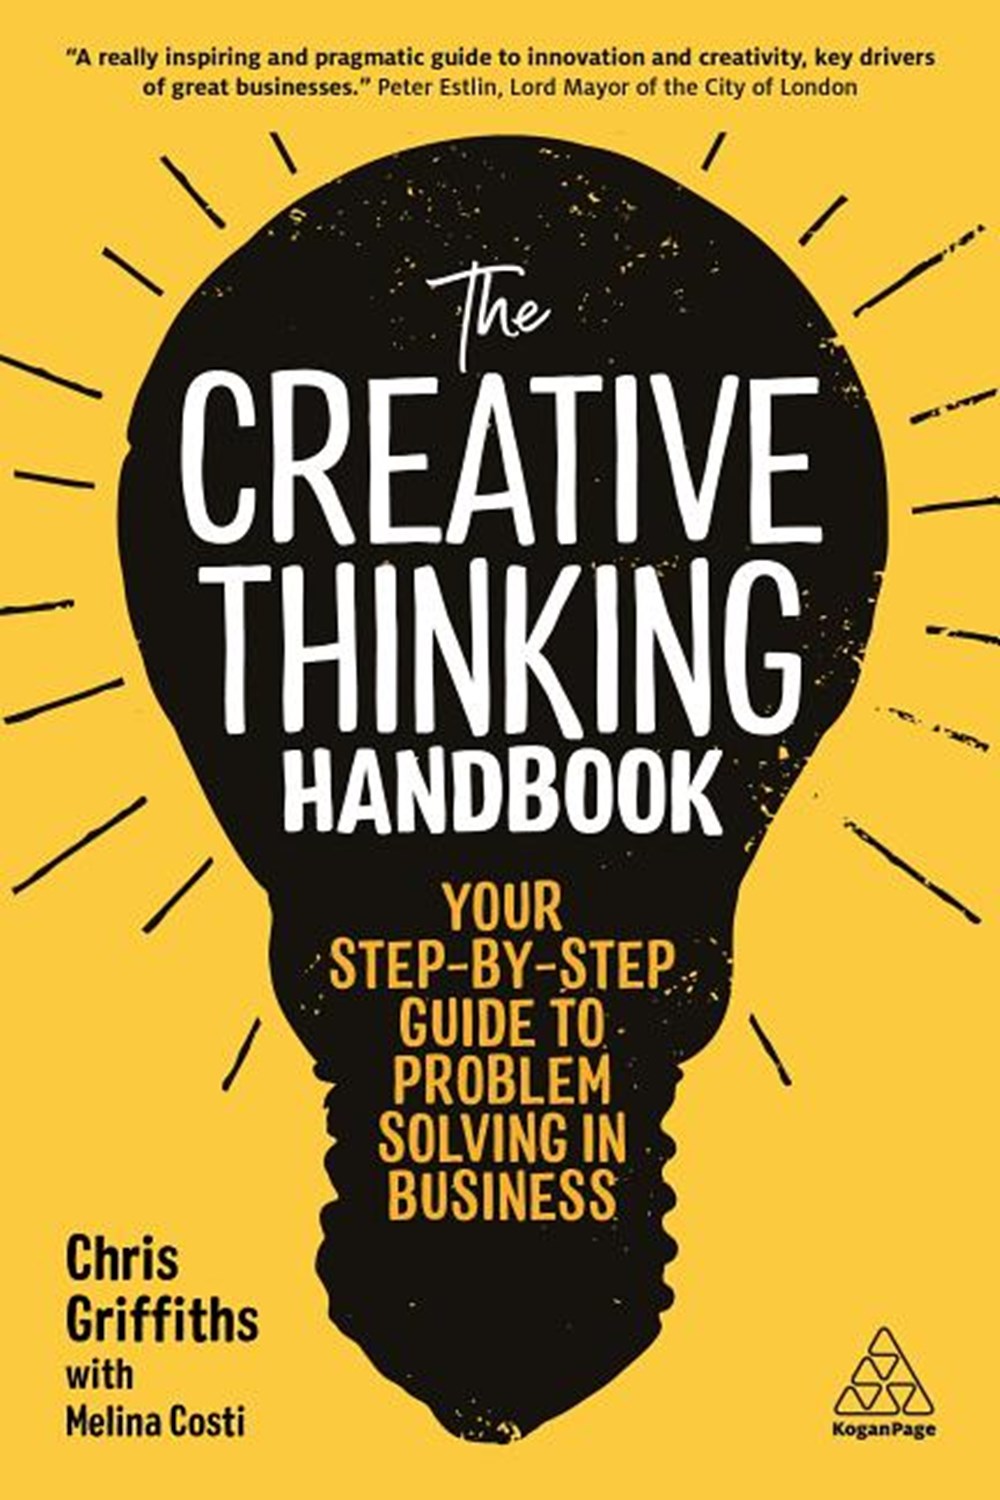 books on creative problem solving